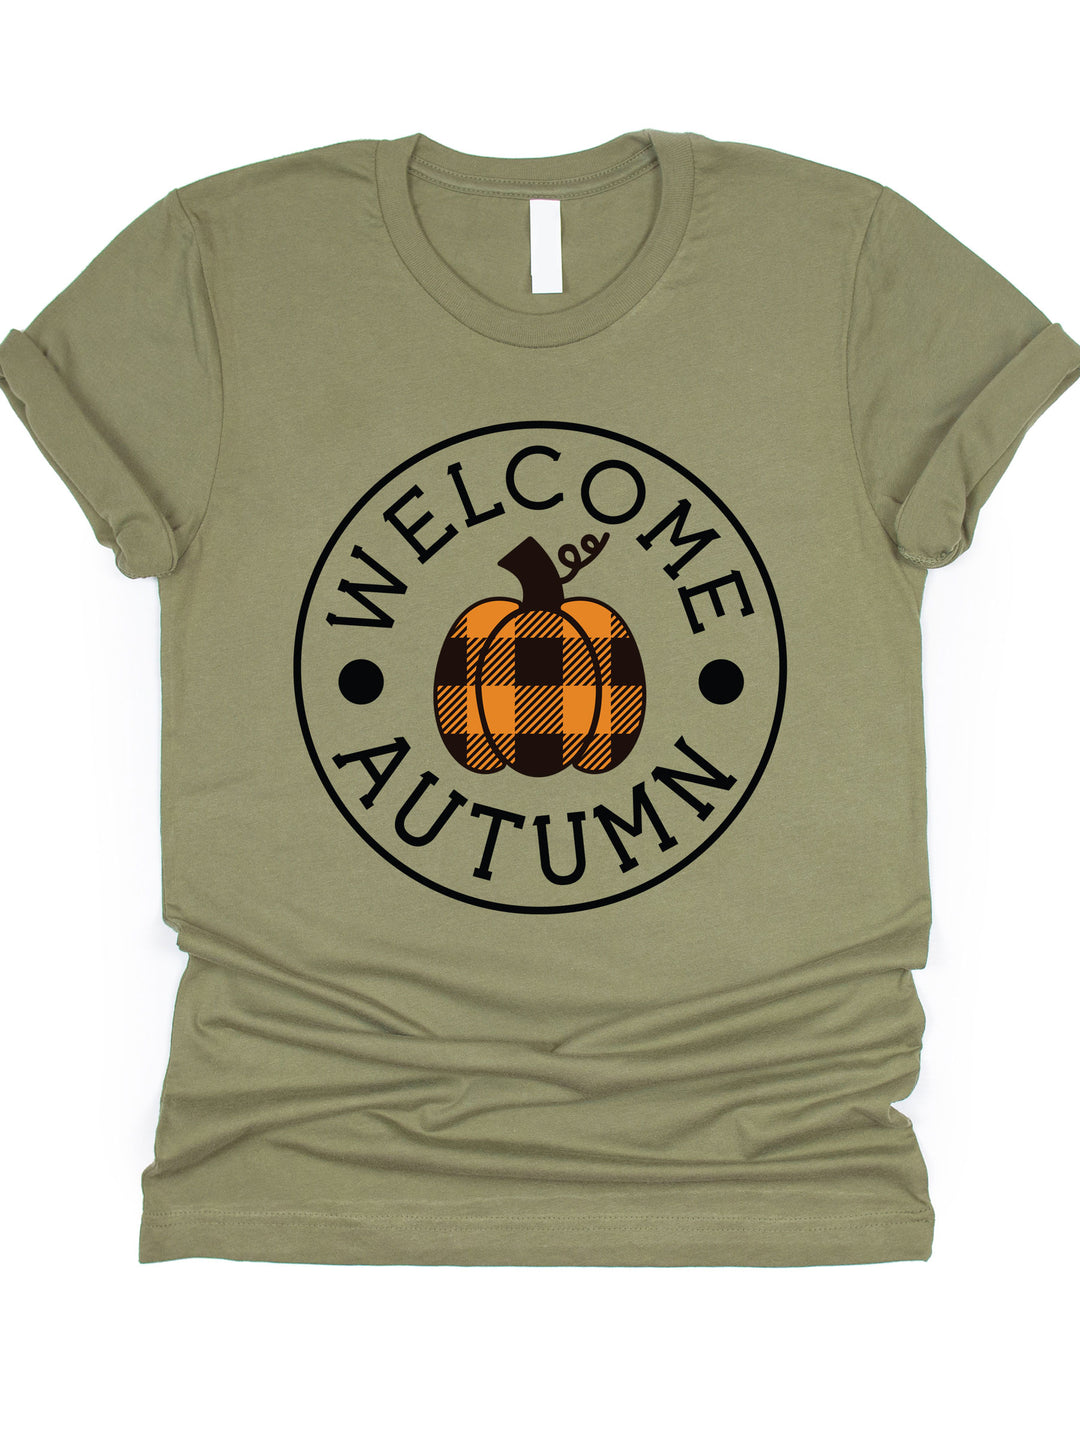 Welcome Autumn Checkered Pumpkin Graphic Tee